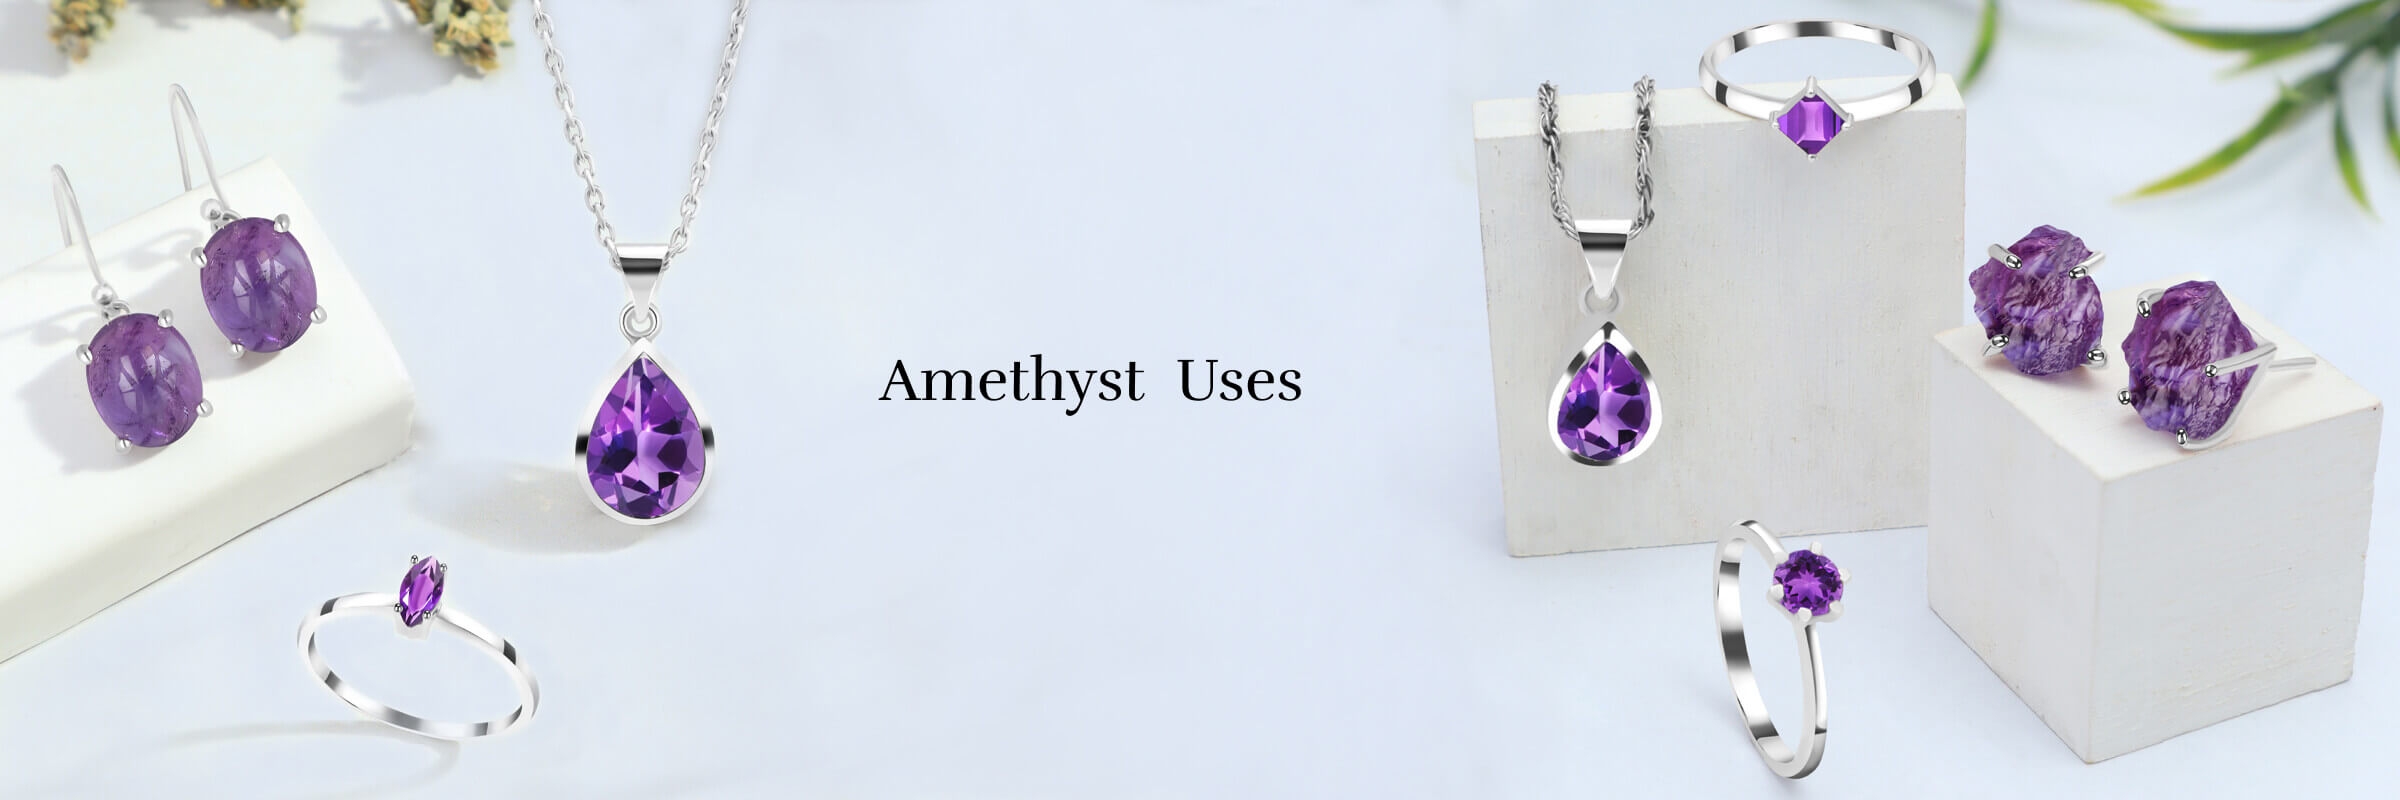 amethyst uses